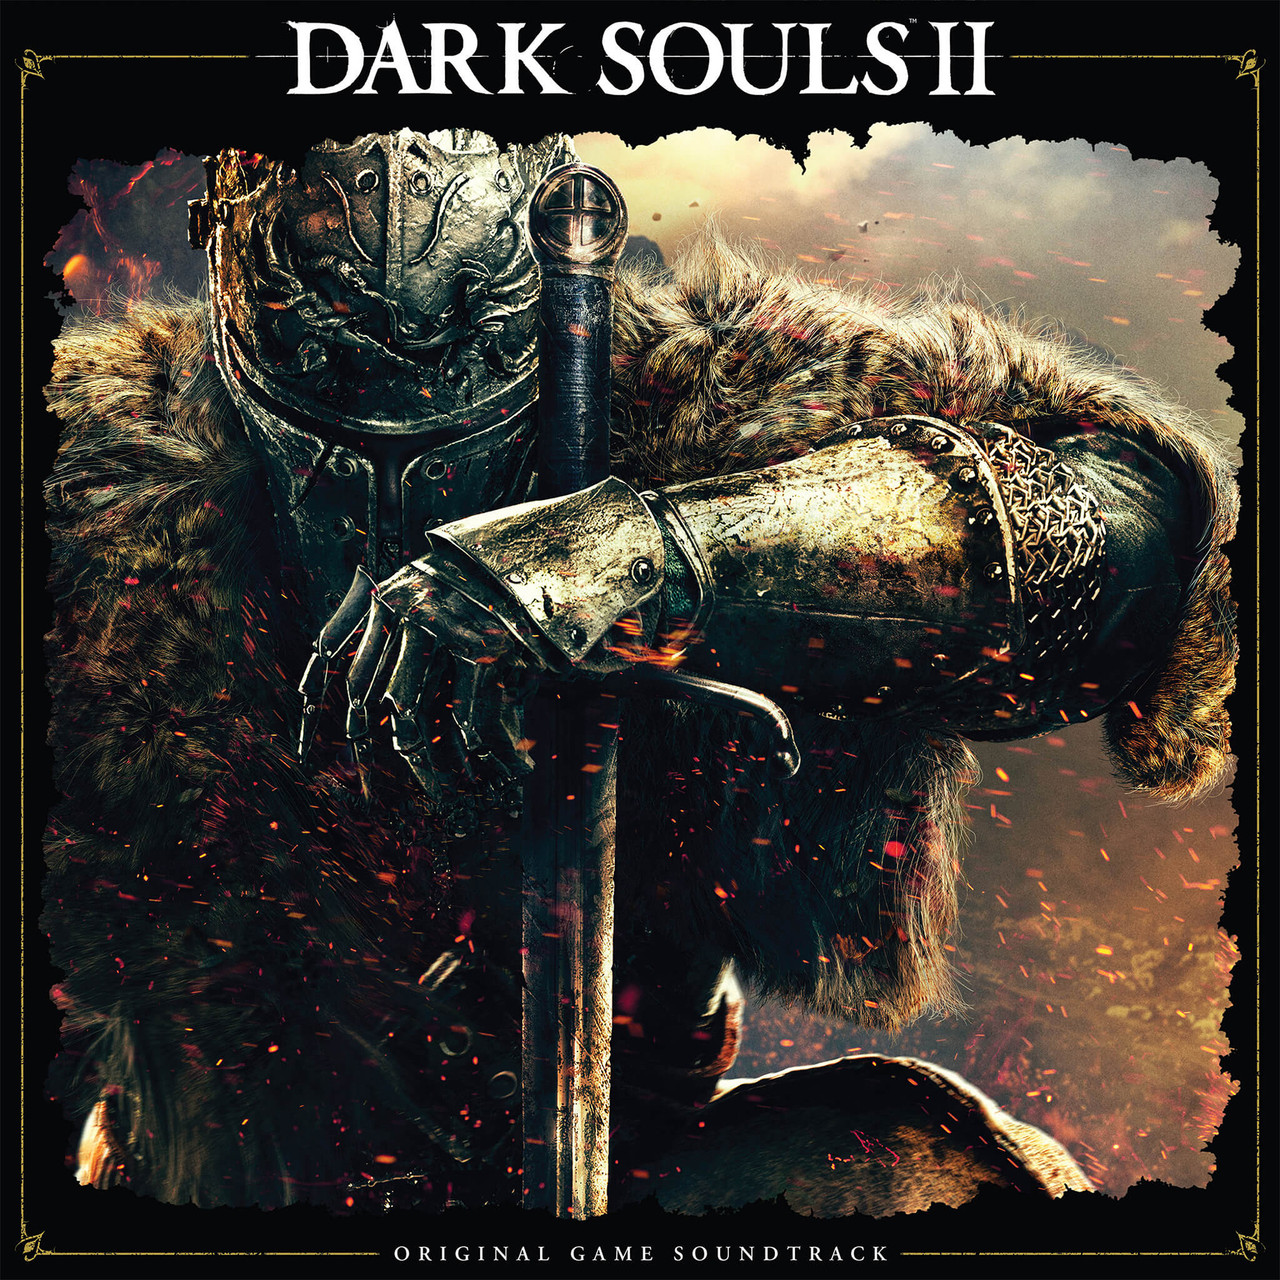 Dark Souls 2 - Album by Motoi Sakuraba